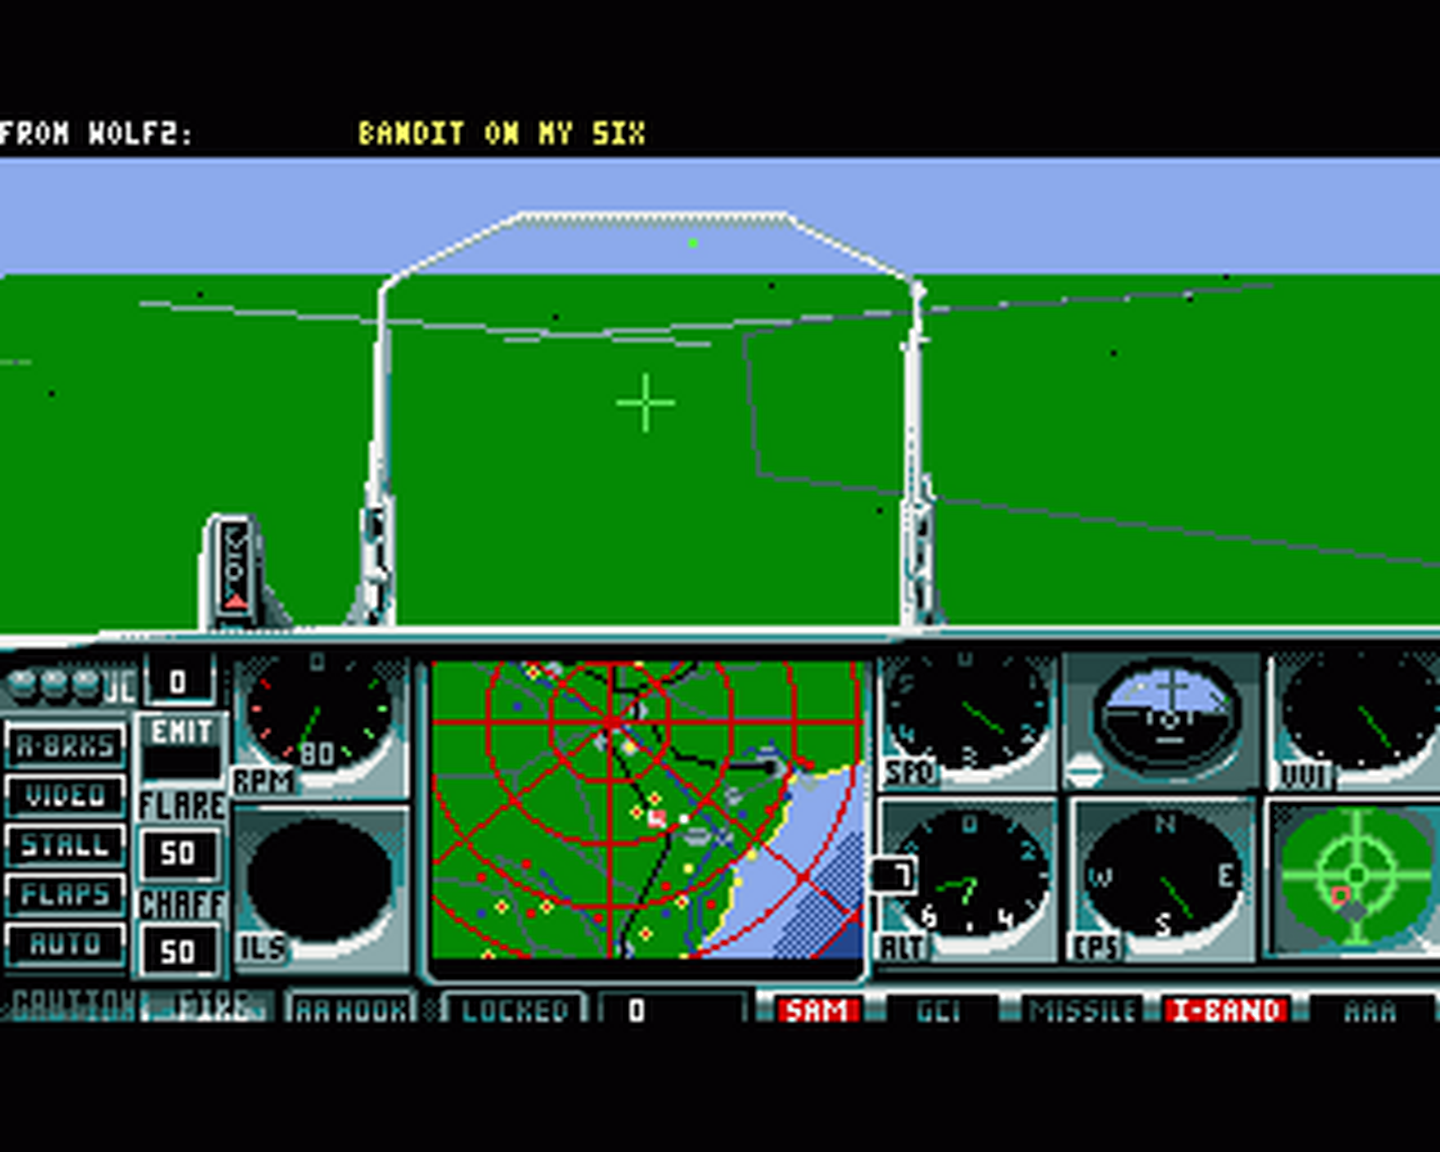 Amiga GameBase Flight_of_the_Intruder Spectrum_HoloByte_-_Mirrorsoft 1991